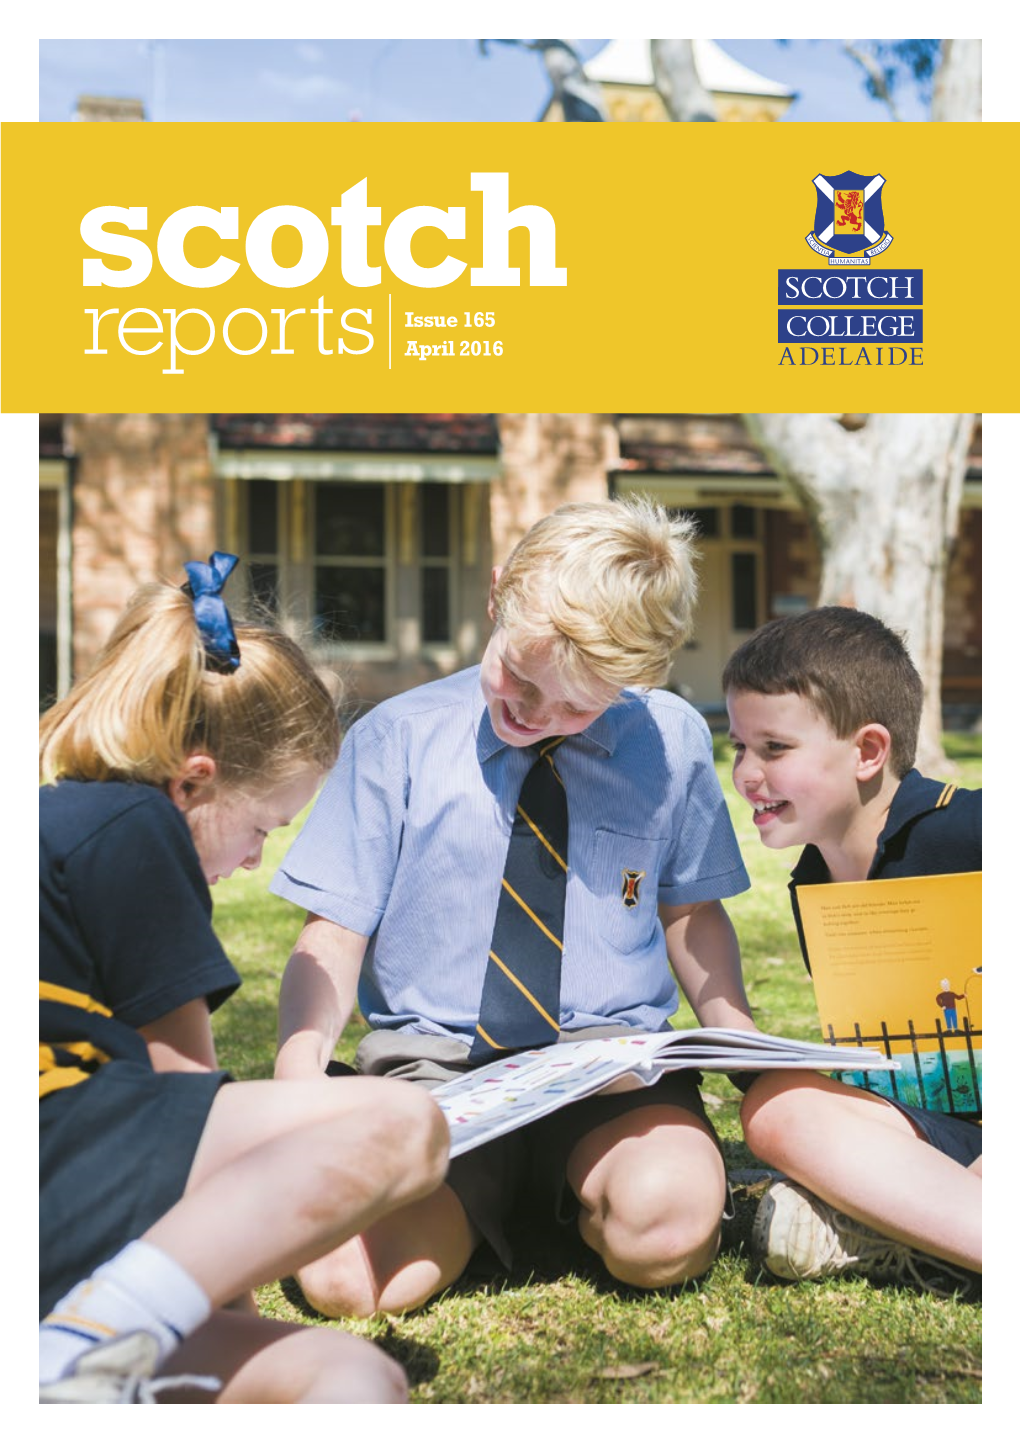 Scotch Issue 165 Reports April 2016 Developments